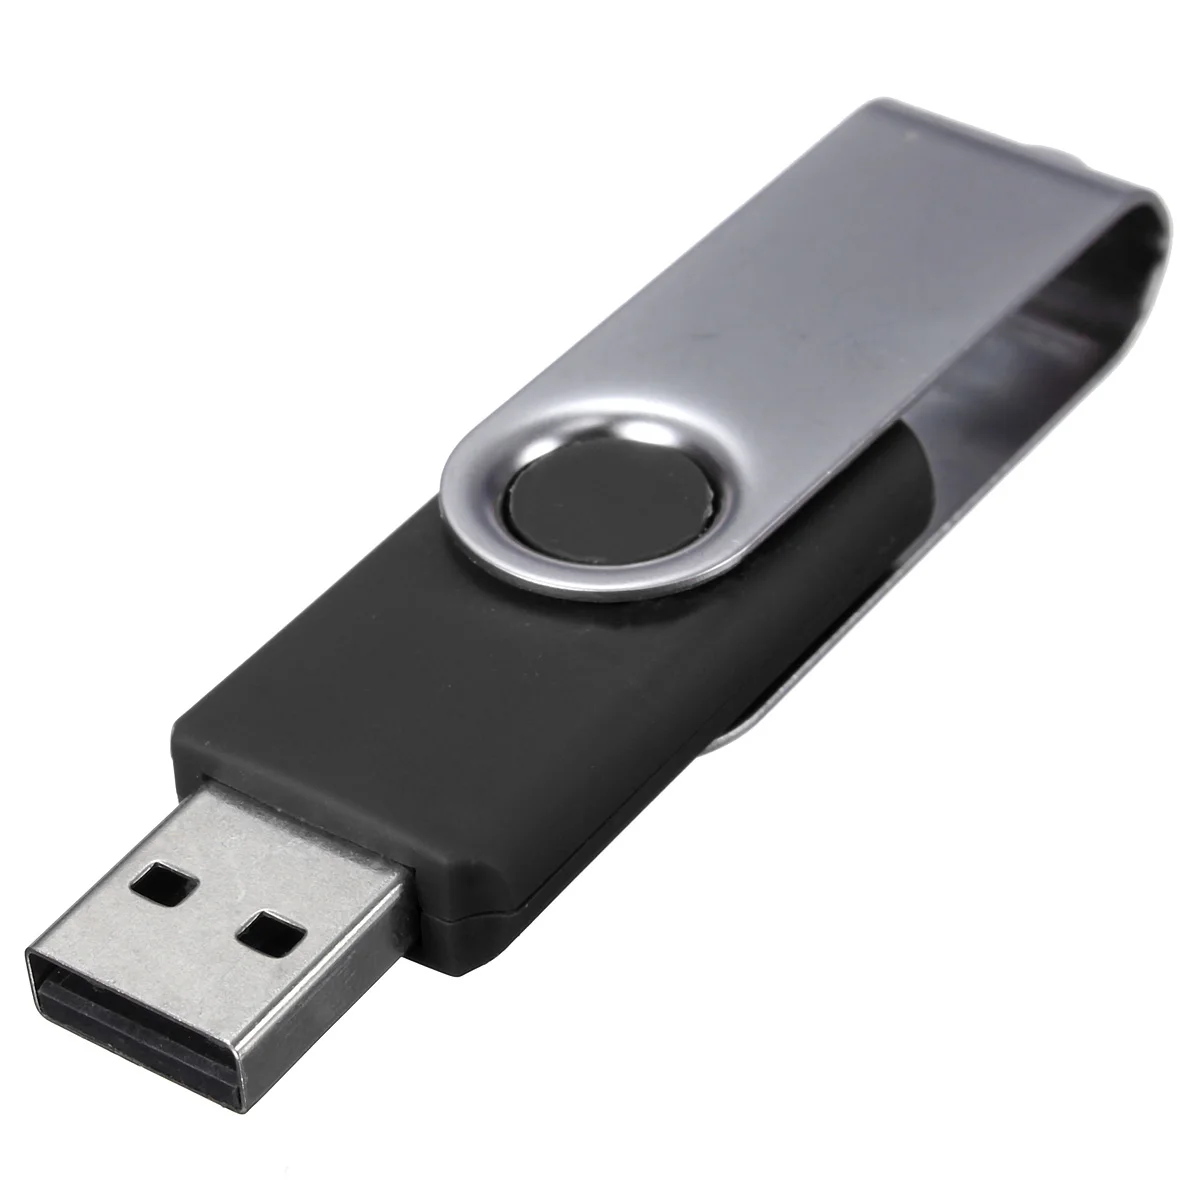 USB флеш-накопитель 64 Мб USB 2,0, флешка для смартфона, планшета, ПК, поворотная USB флеш-карта памяти, Подарочная флешка